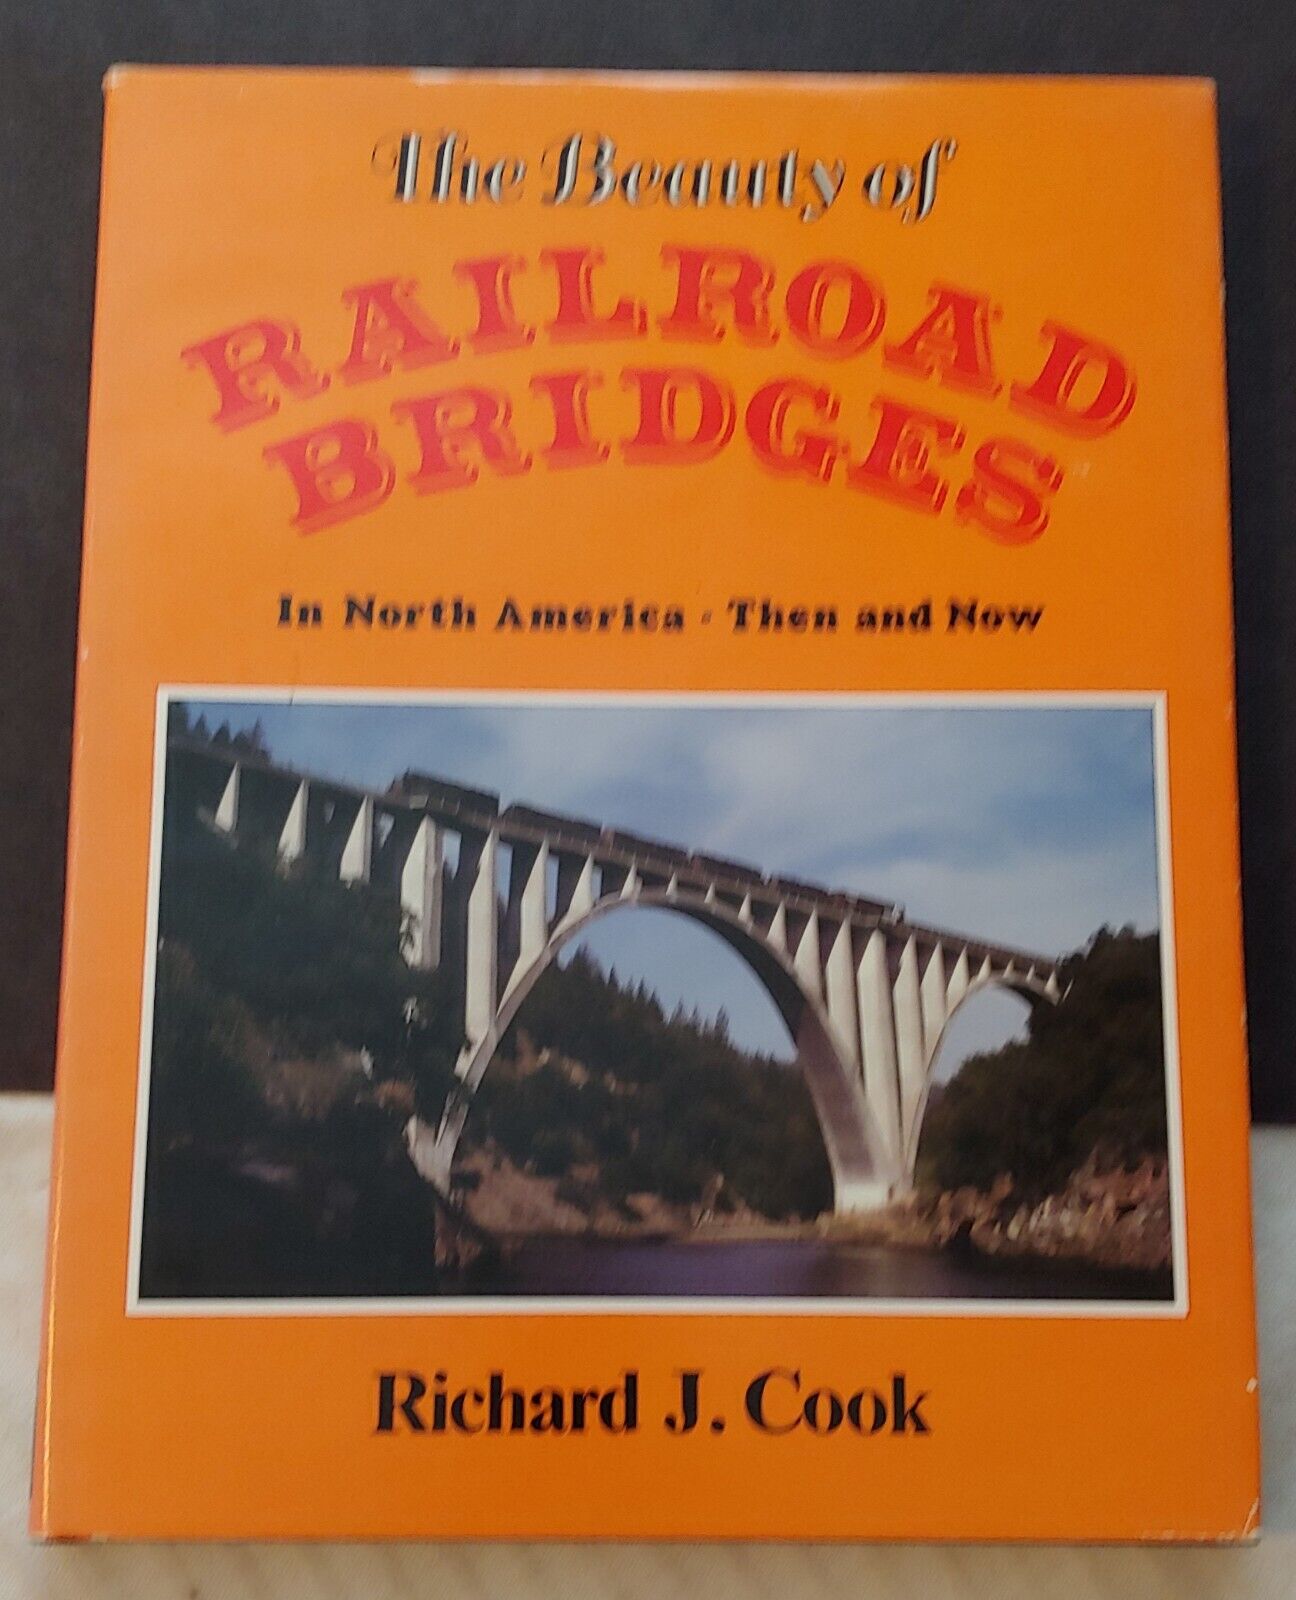 ***VINTAGE 1987 THE BEAUTY OF RAILROAD BRIDGES IN NORTH AMERICA HC/DJ BOOK***